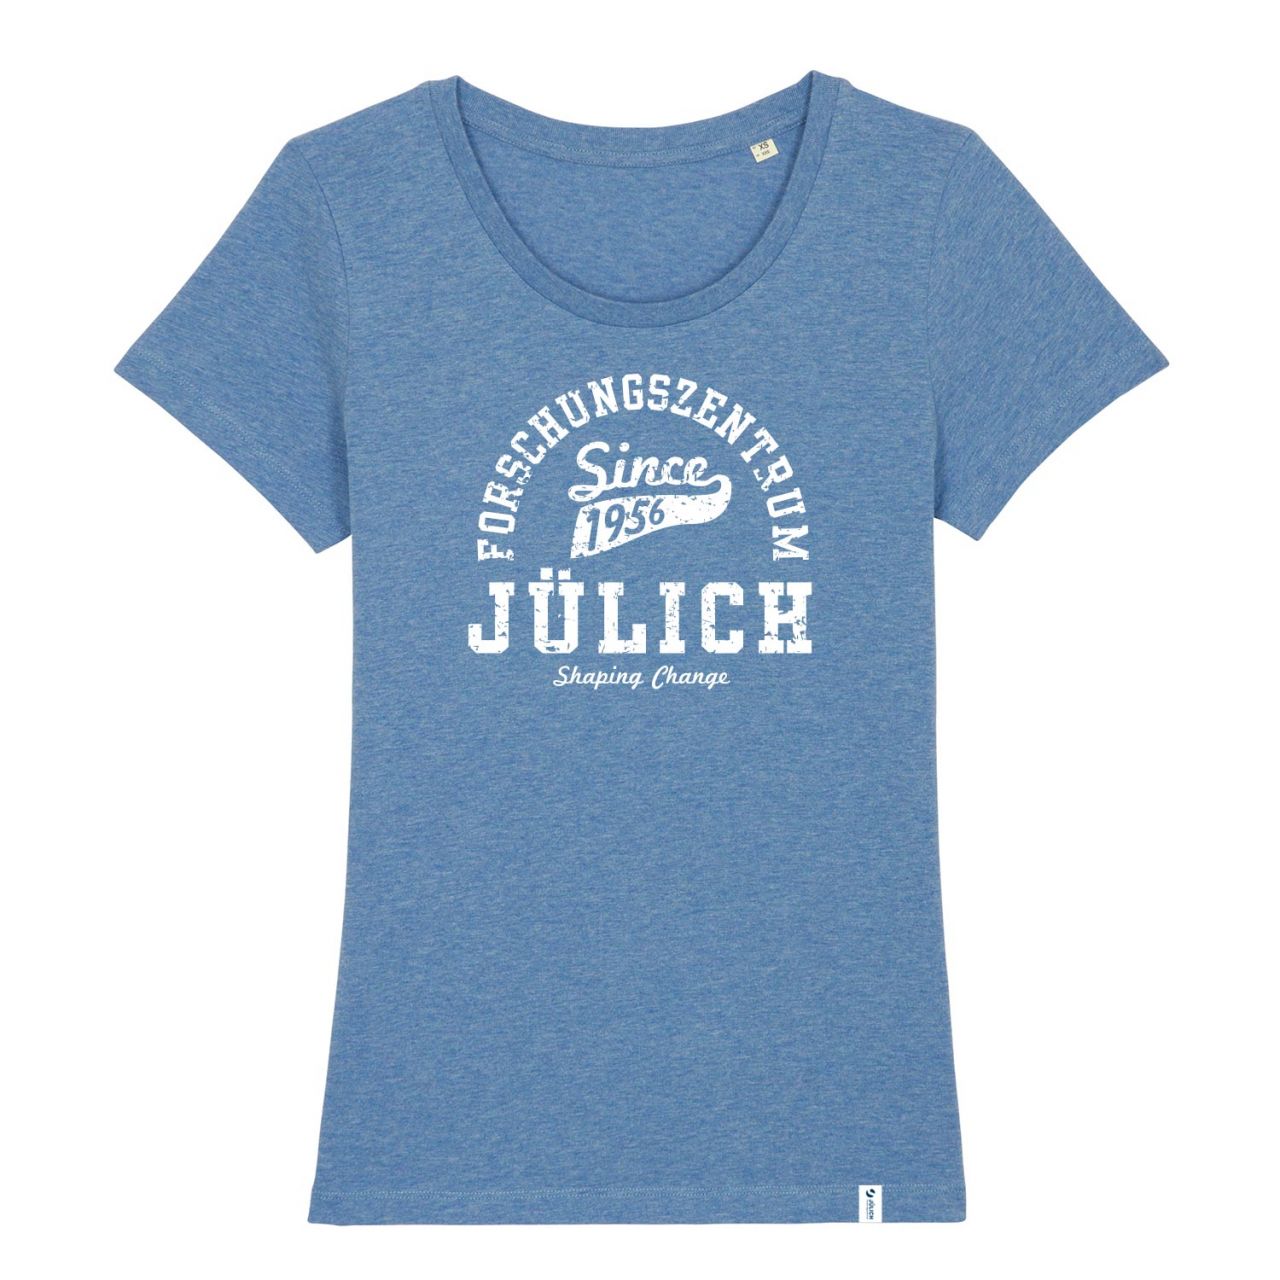 Women's Organic T-Shirt, mid heather blue, berklex